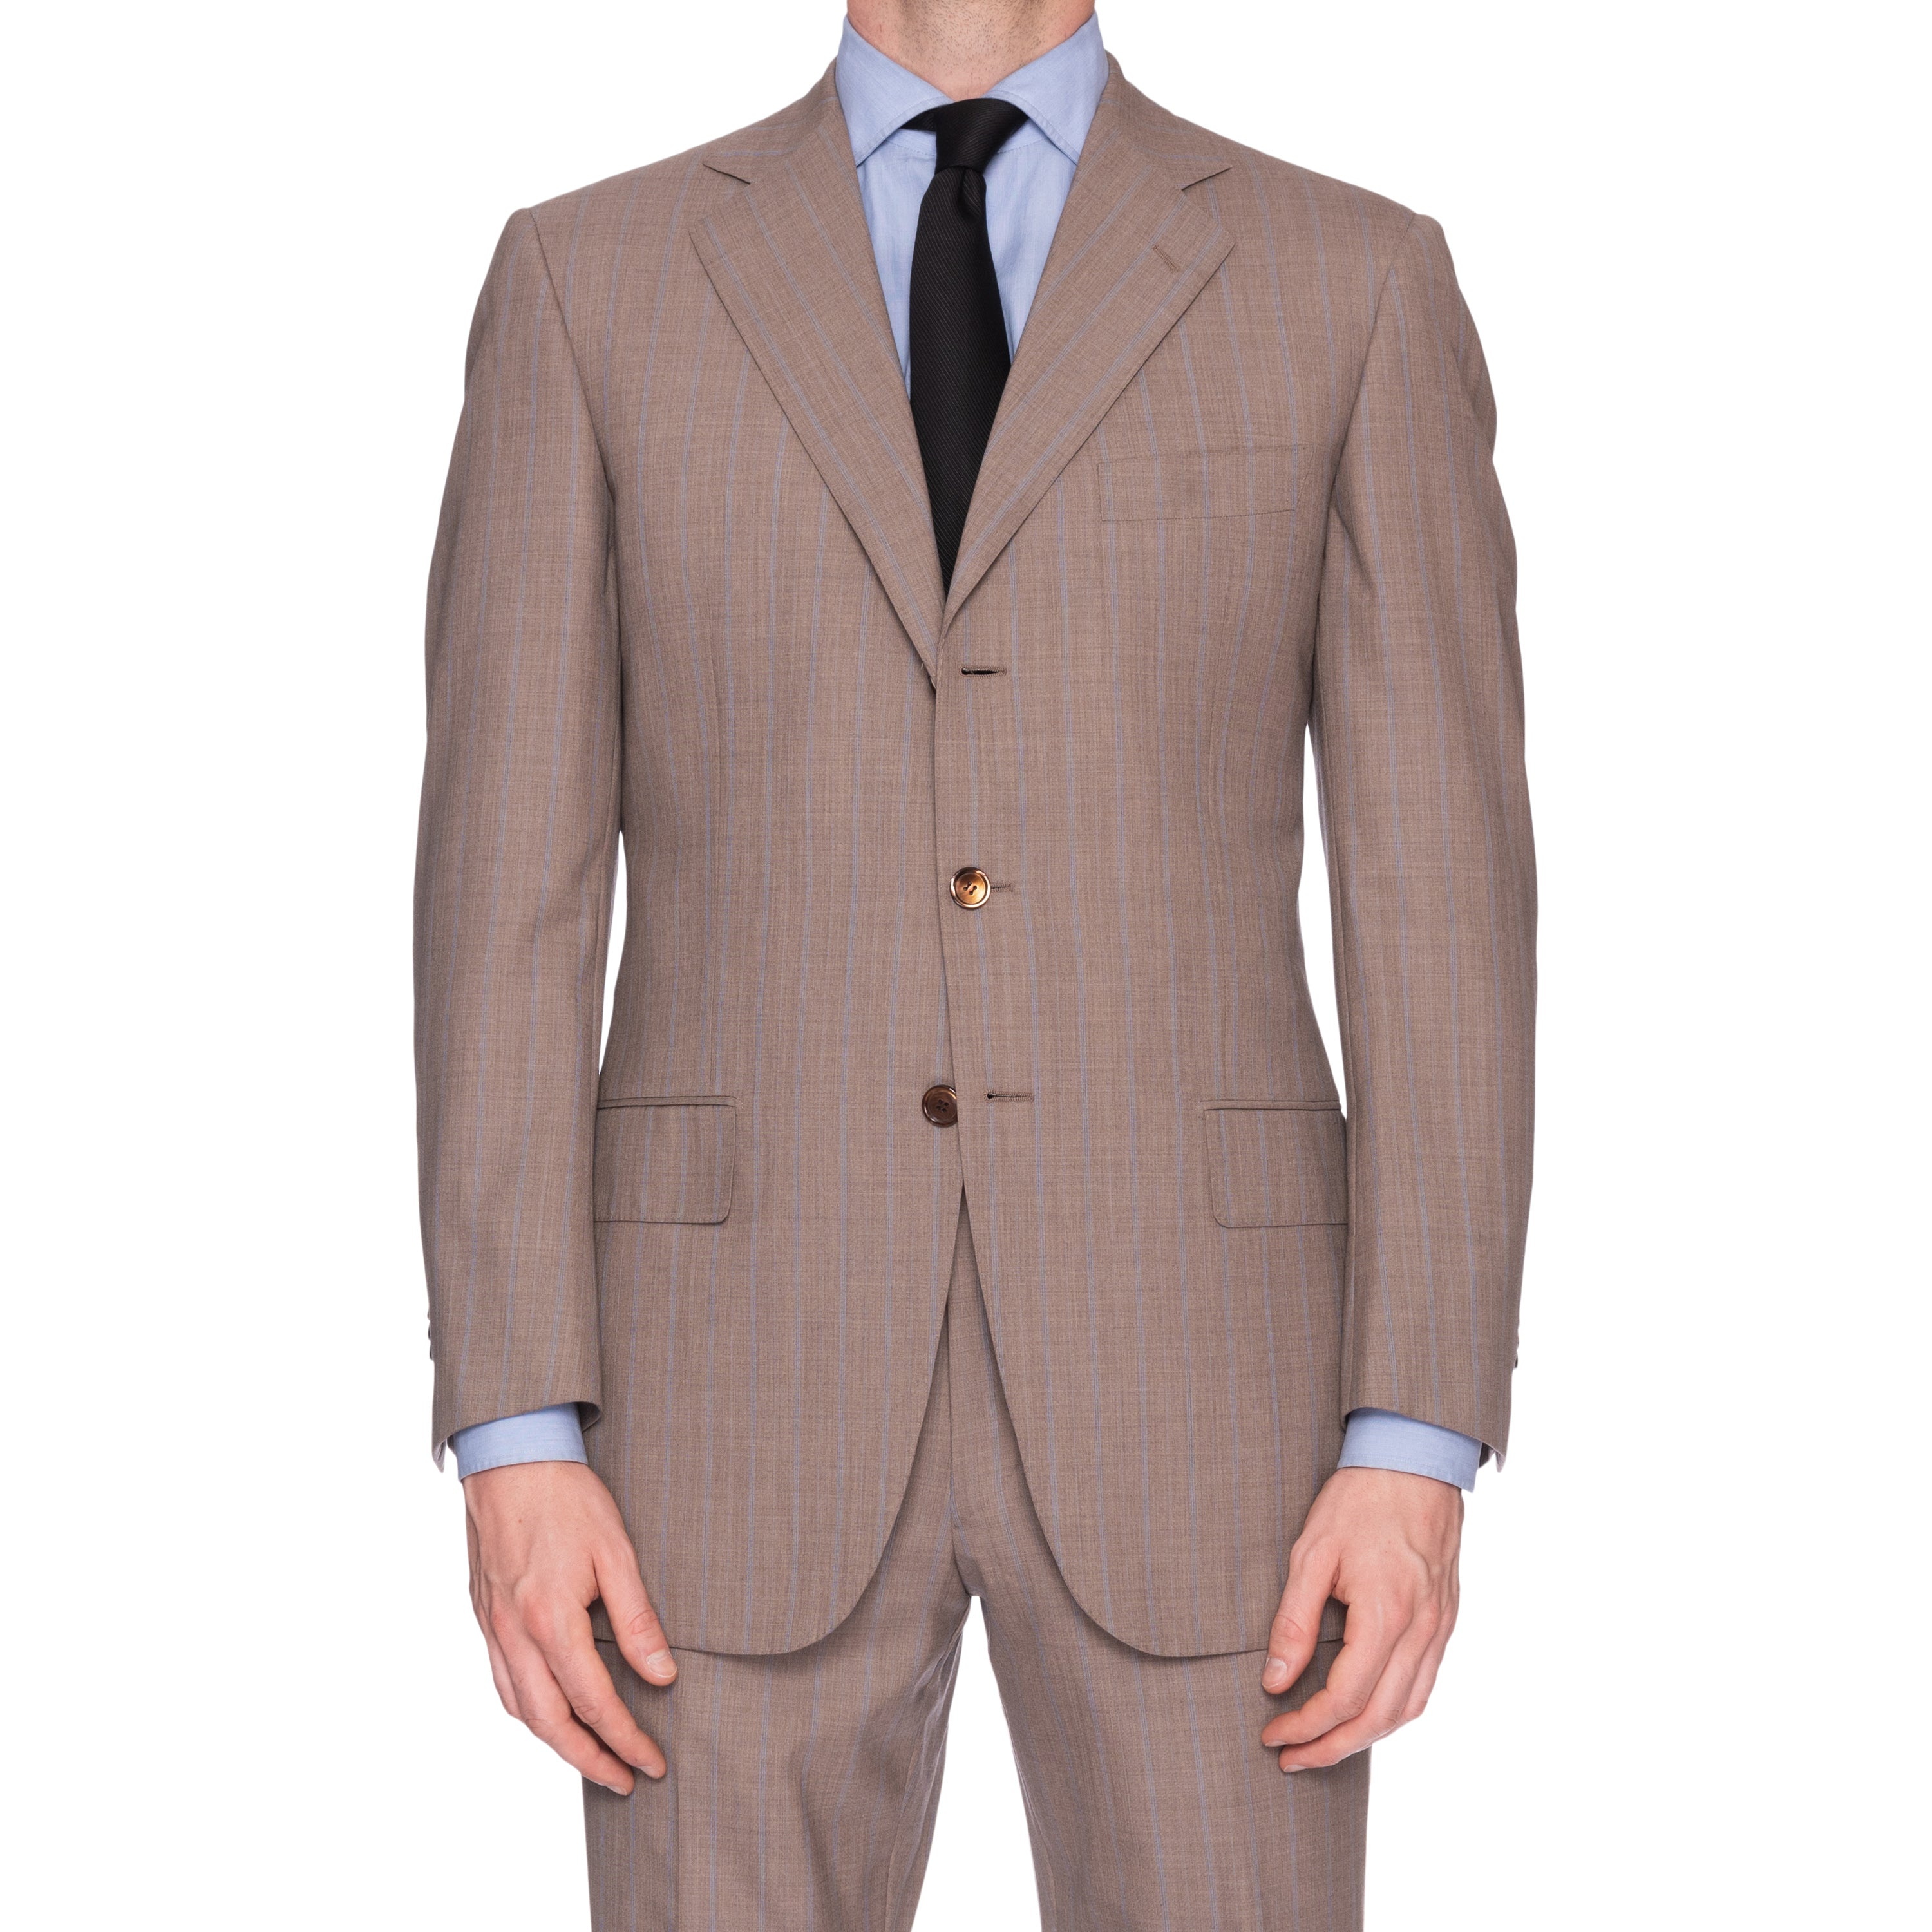 SARTORIA CASTANGIA Taupe Gray Striped Wool Super 120's Suit EU 50 NEW US 40 CASTANGIA